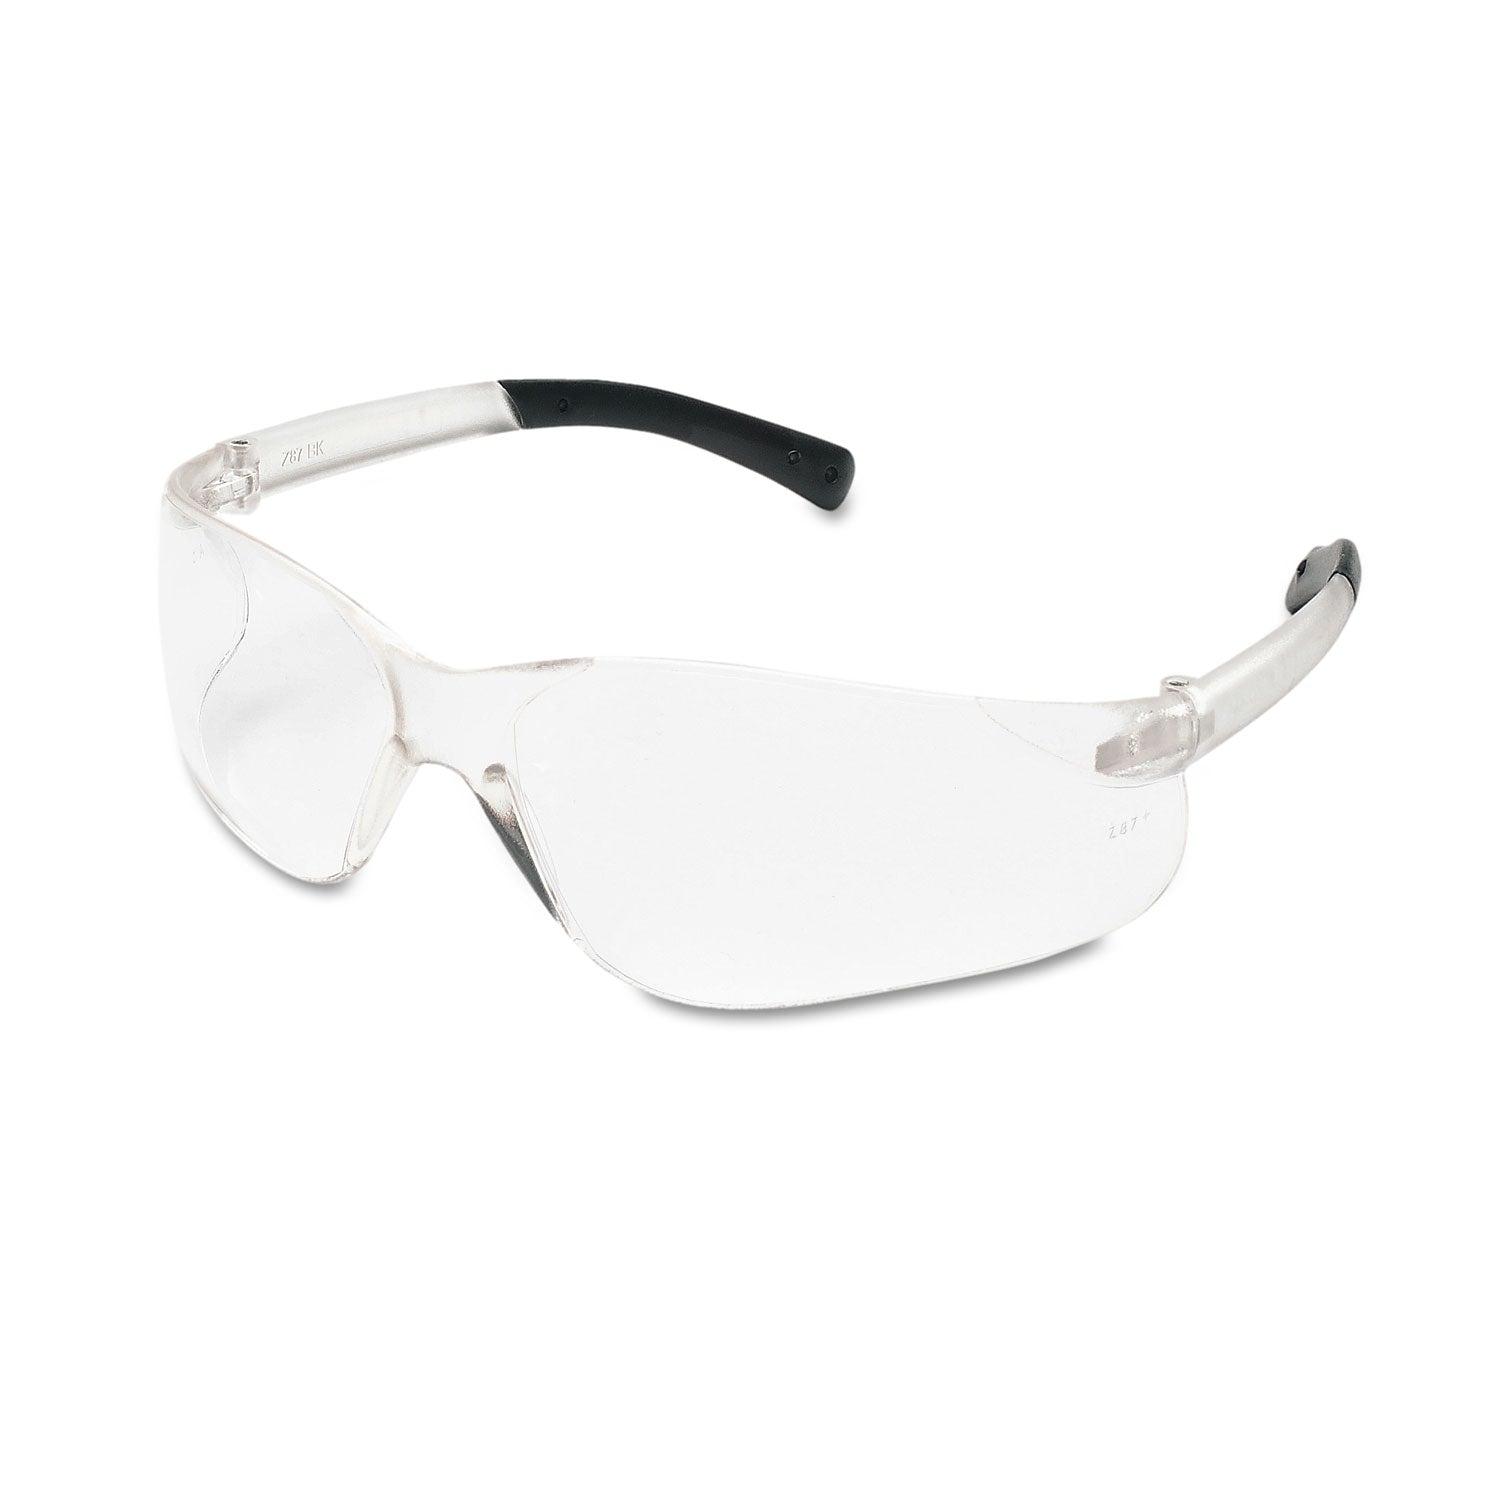 bearkat-safety-glasses-wraparound-black-frame-clear-lens-12-box_crwbk110bx - 1